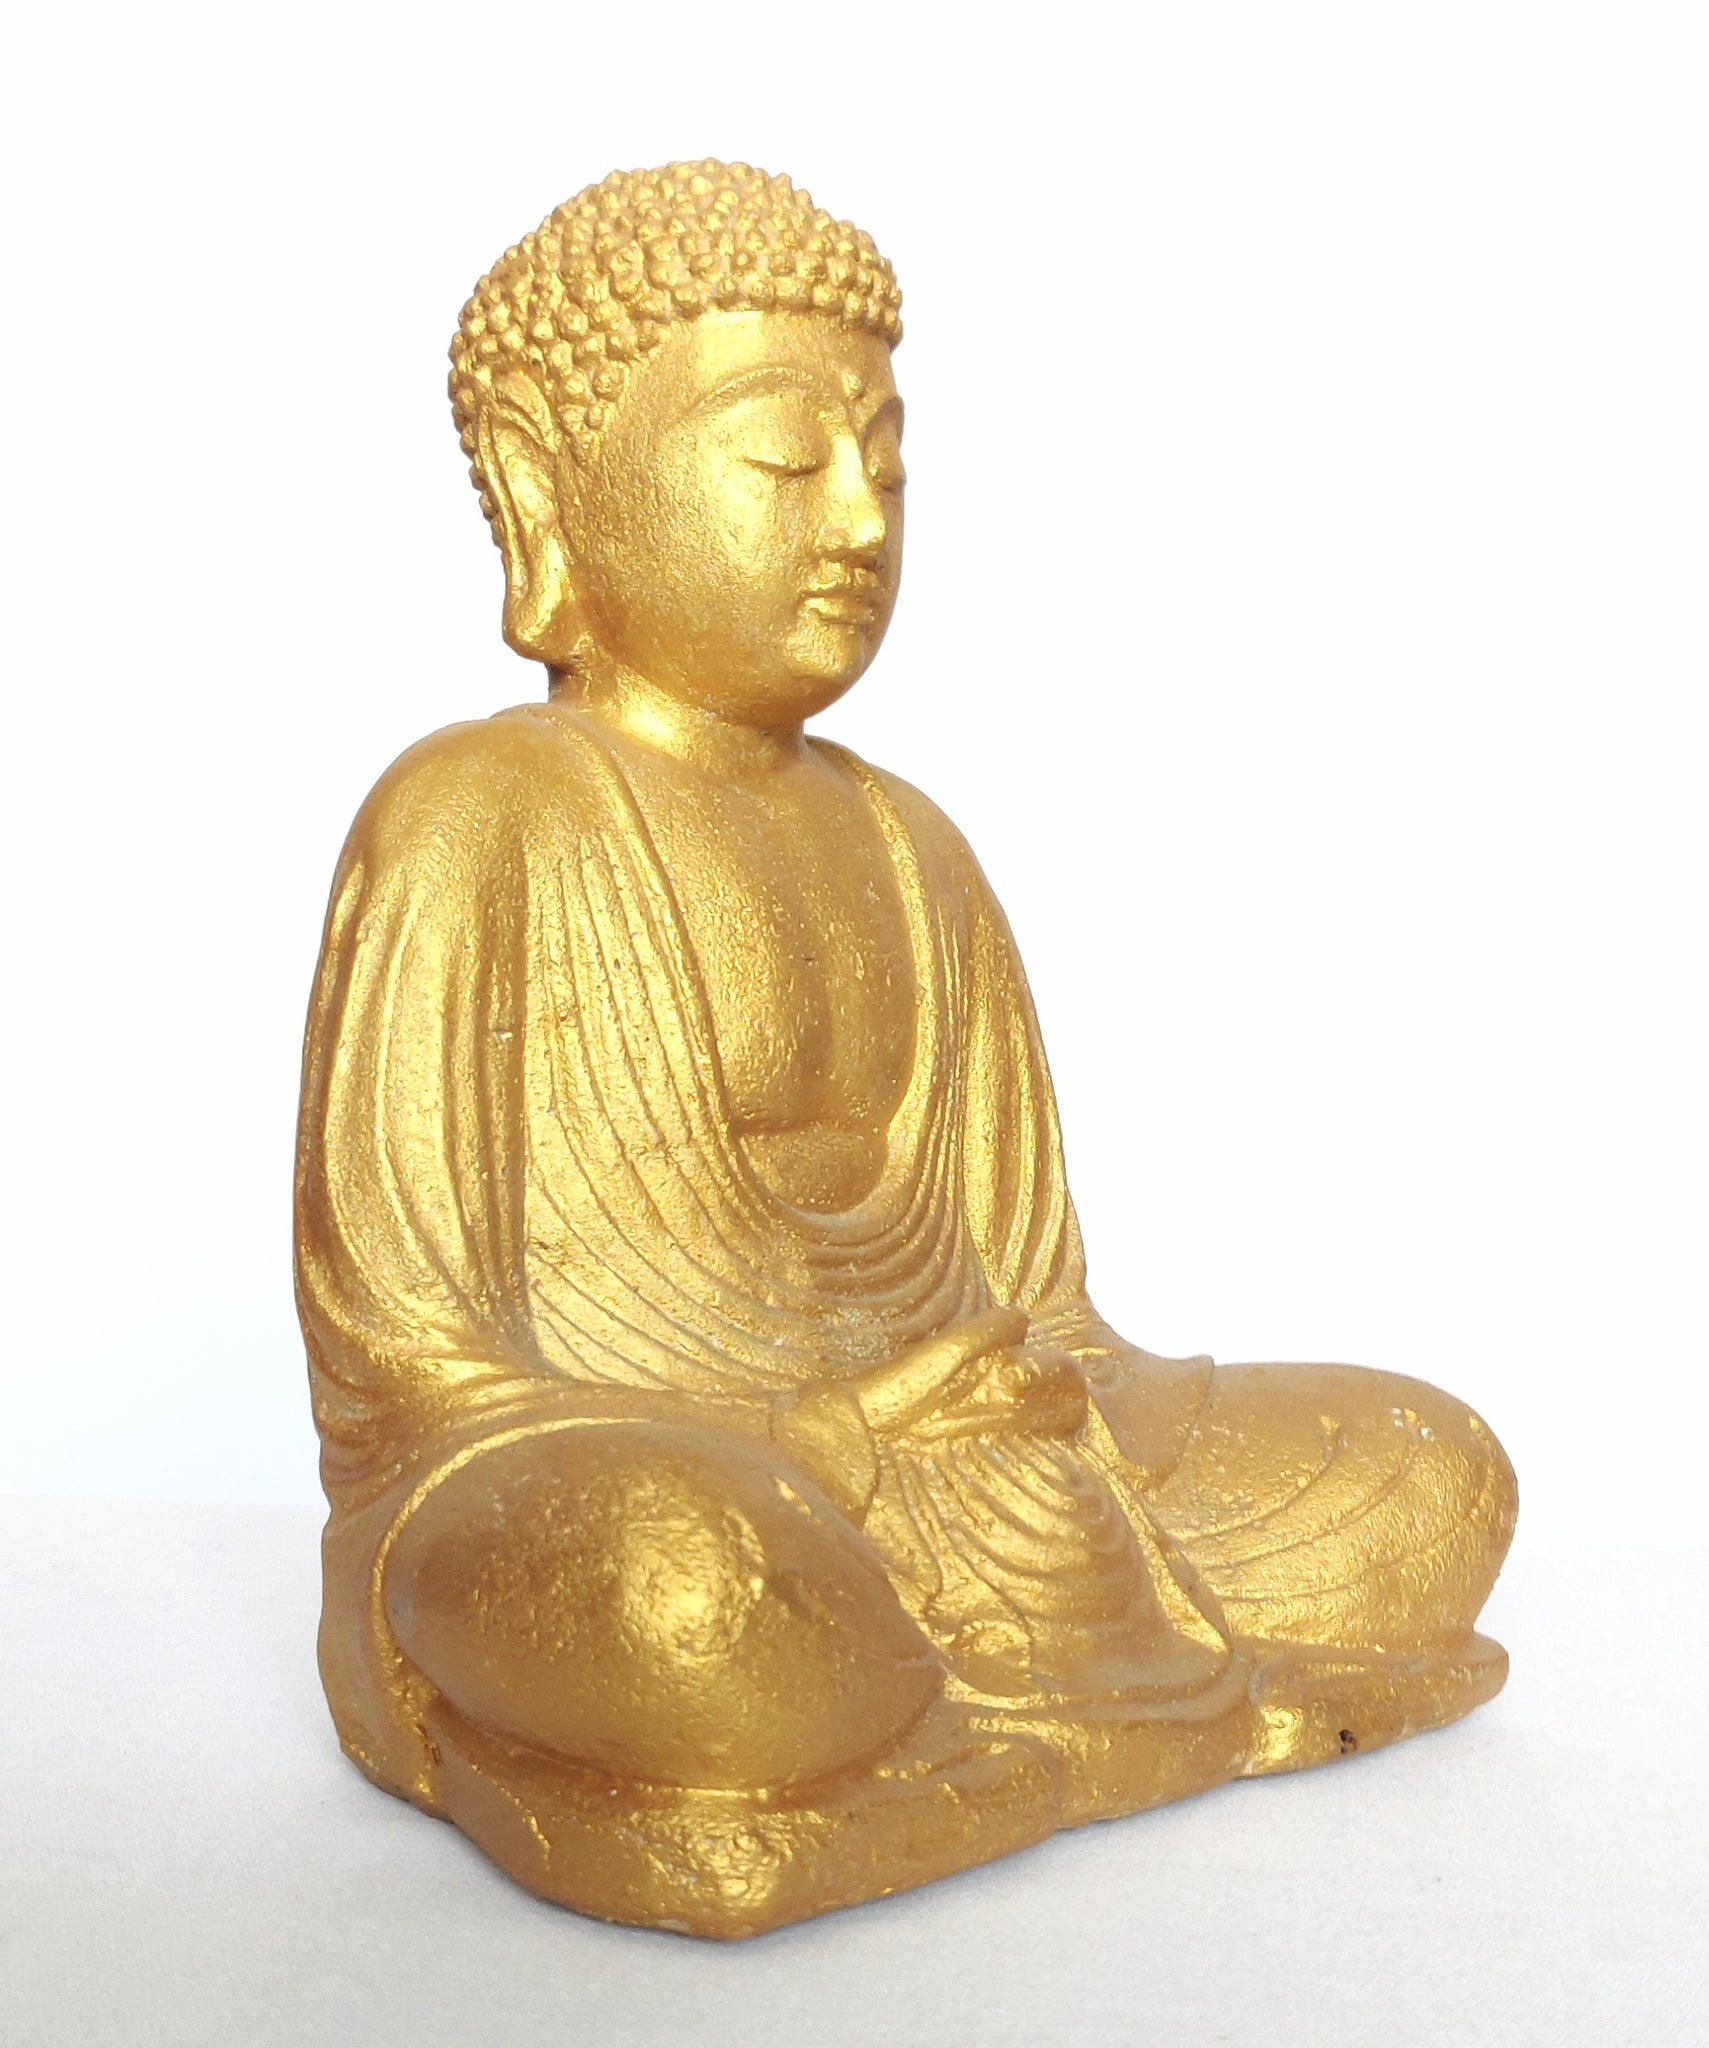 Golden buddha statue, gold buddha, meditating concept, calm